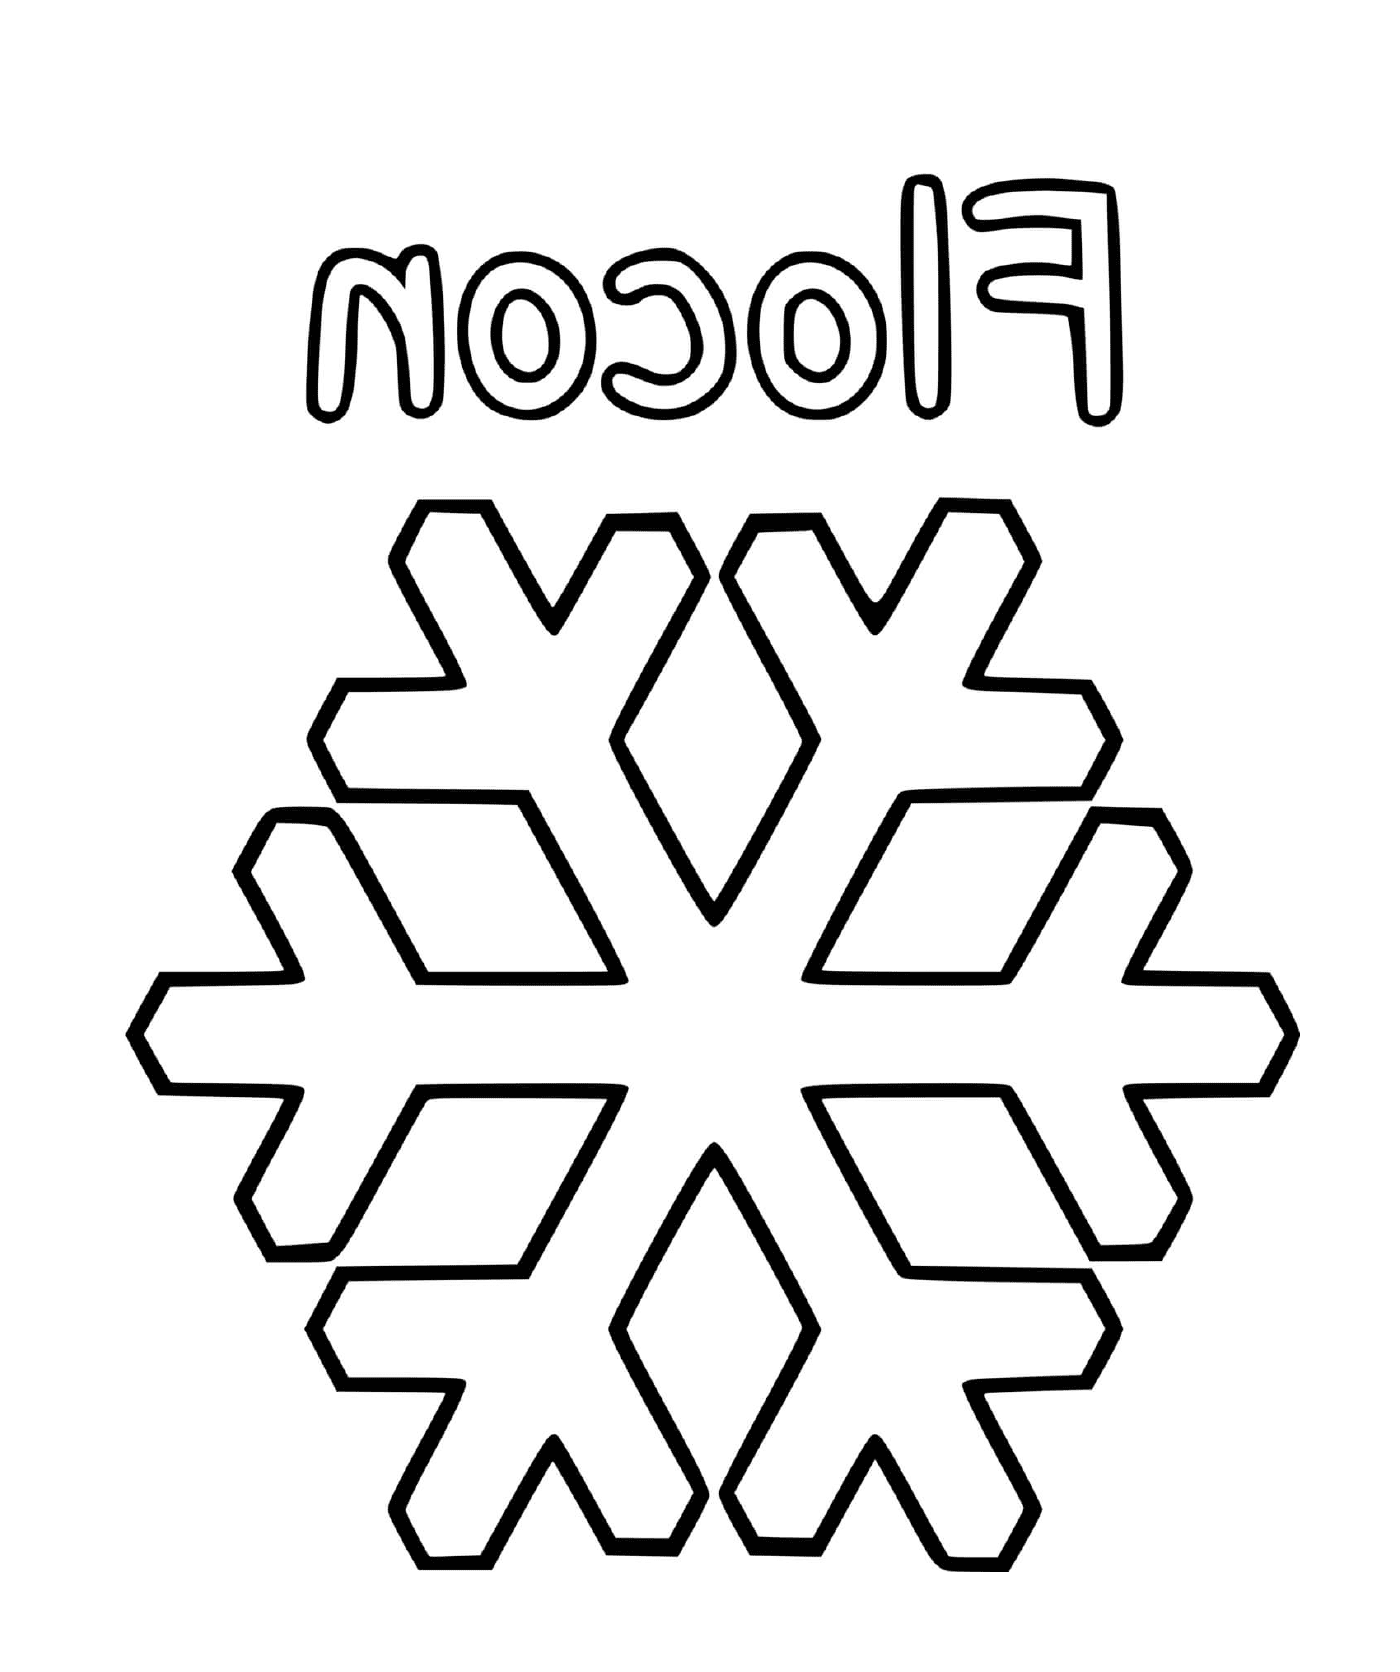  A simple snowflake 